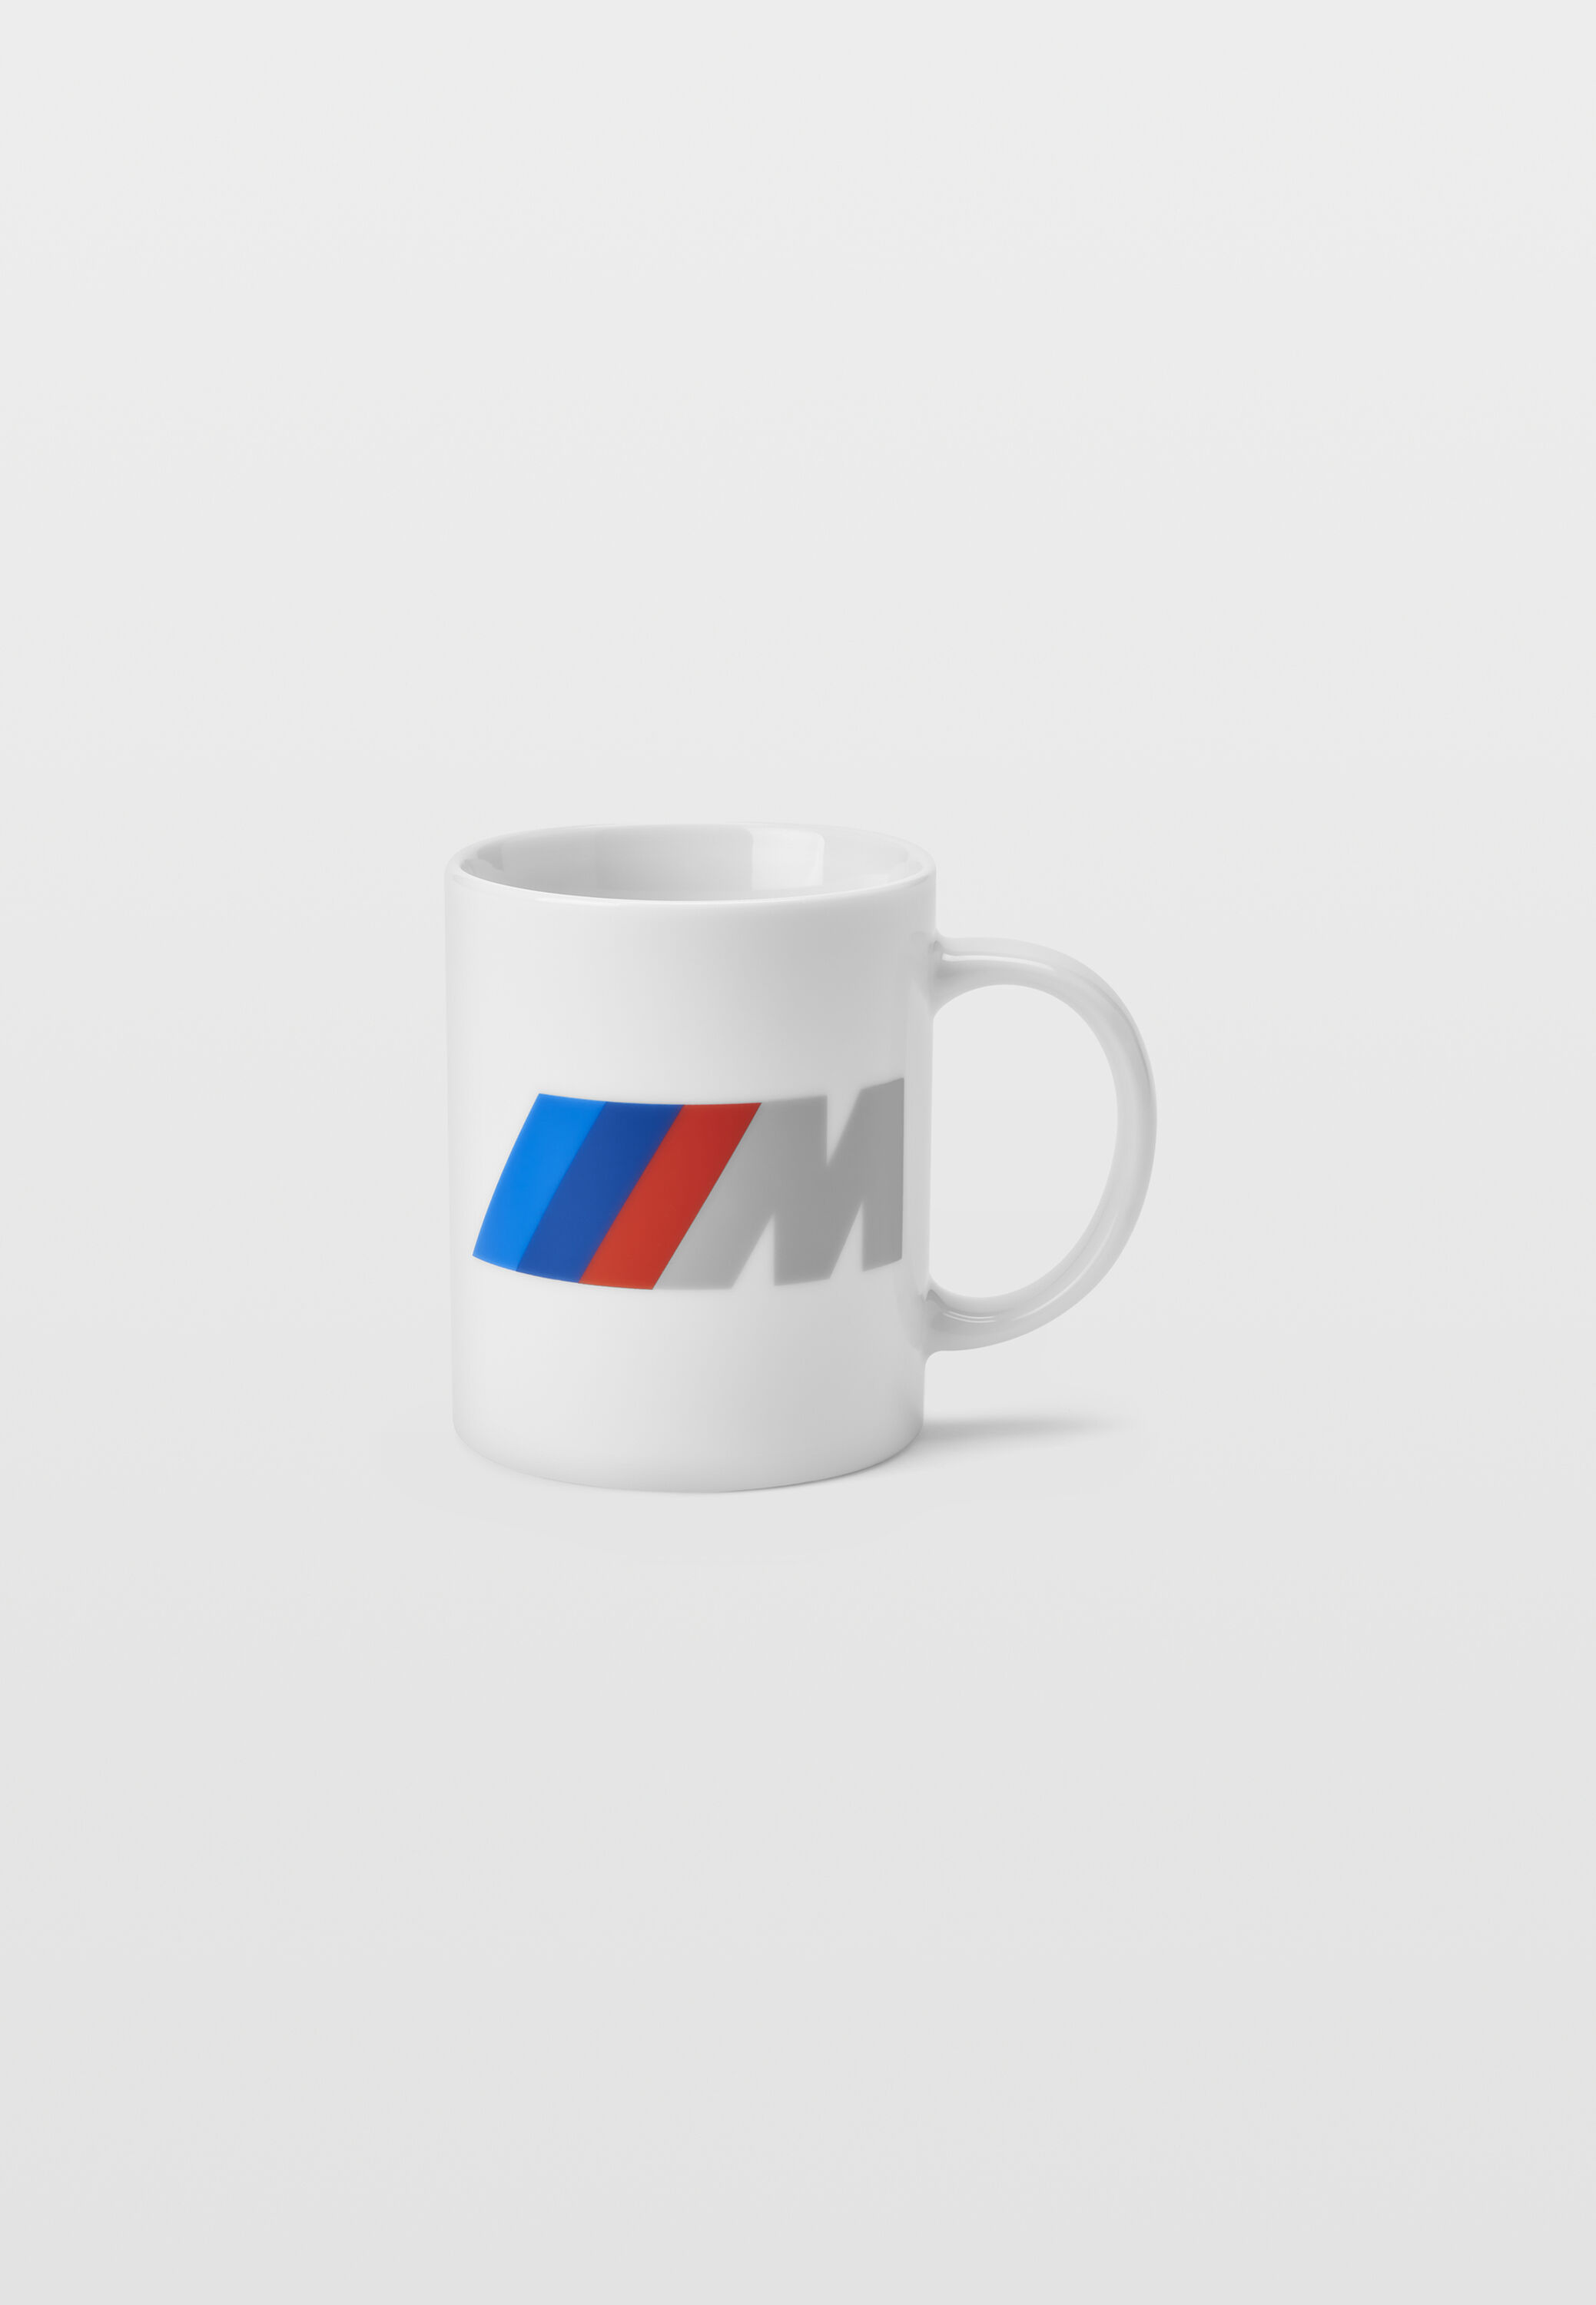 BMW Mug M Performance - High quality ceramic mug with stylish